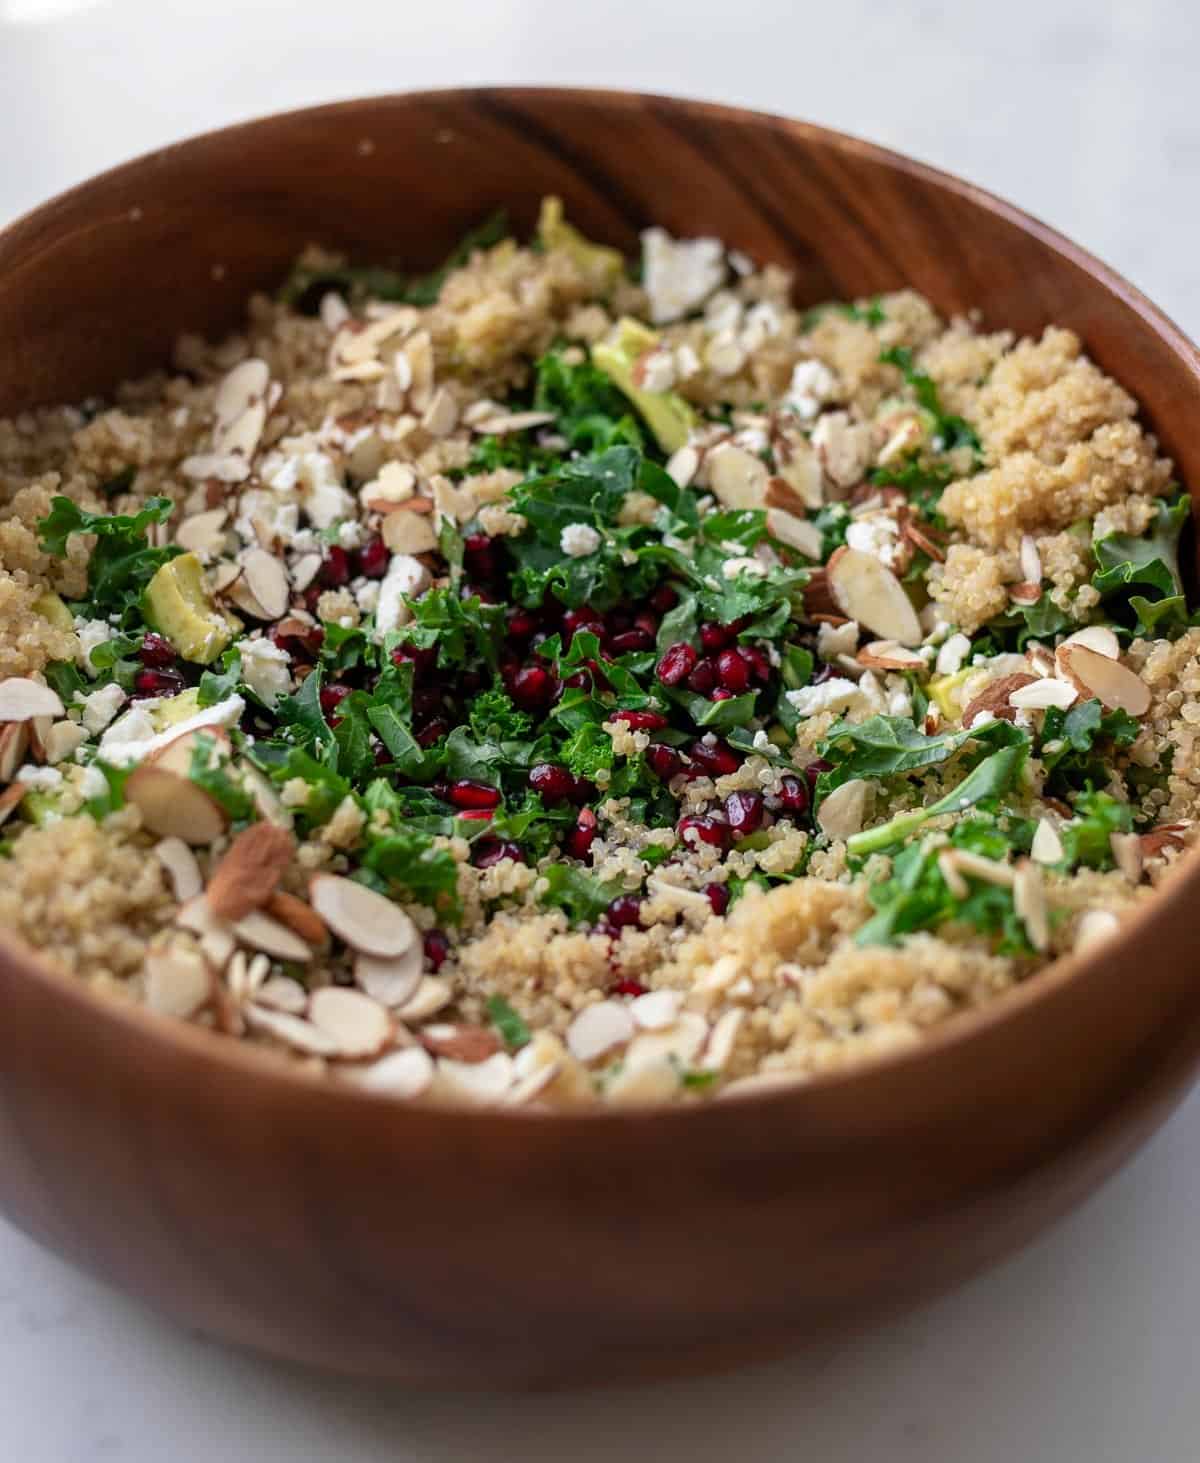 Kale, pomegranates, quinoa, almonds, and feta in a wood salad bowl.